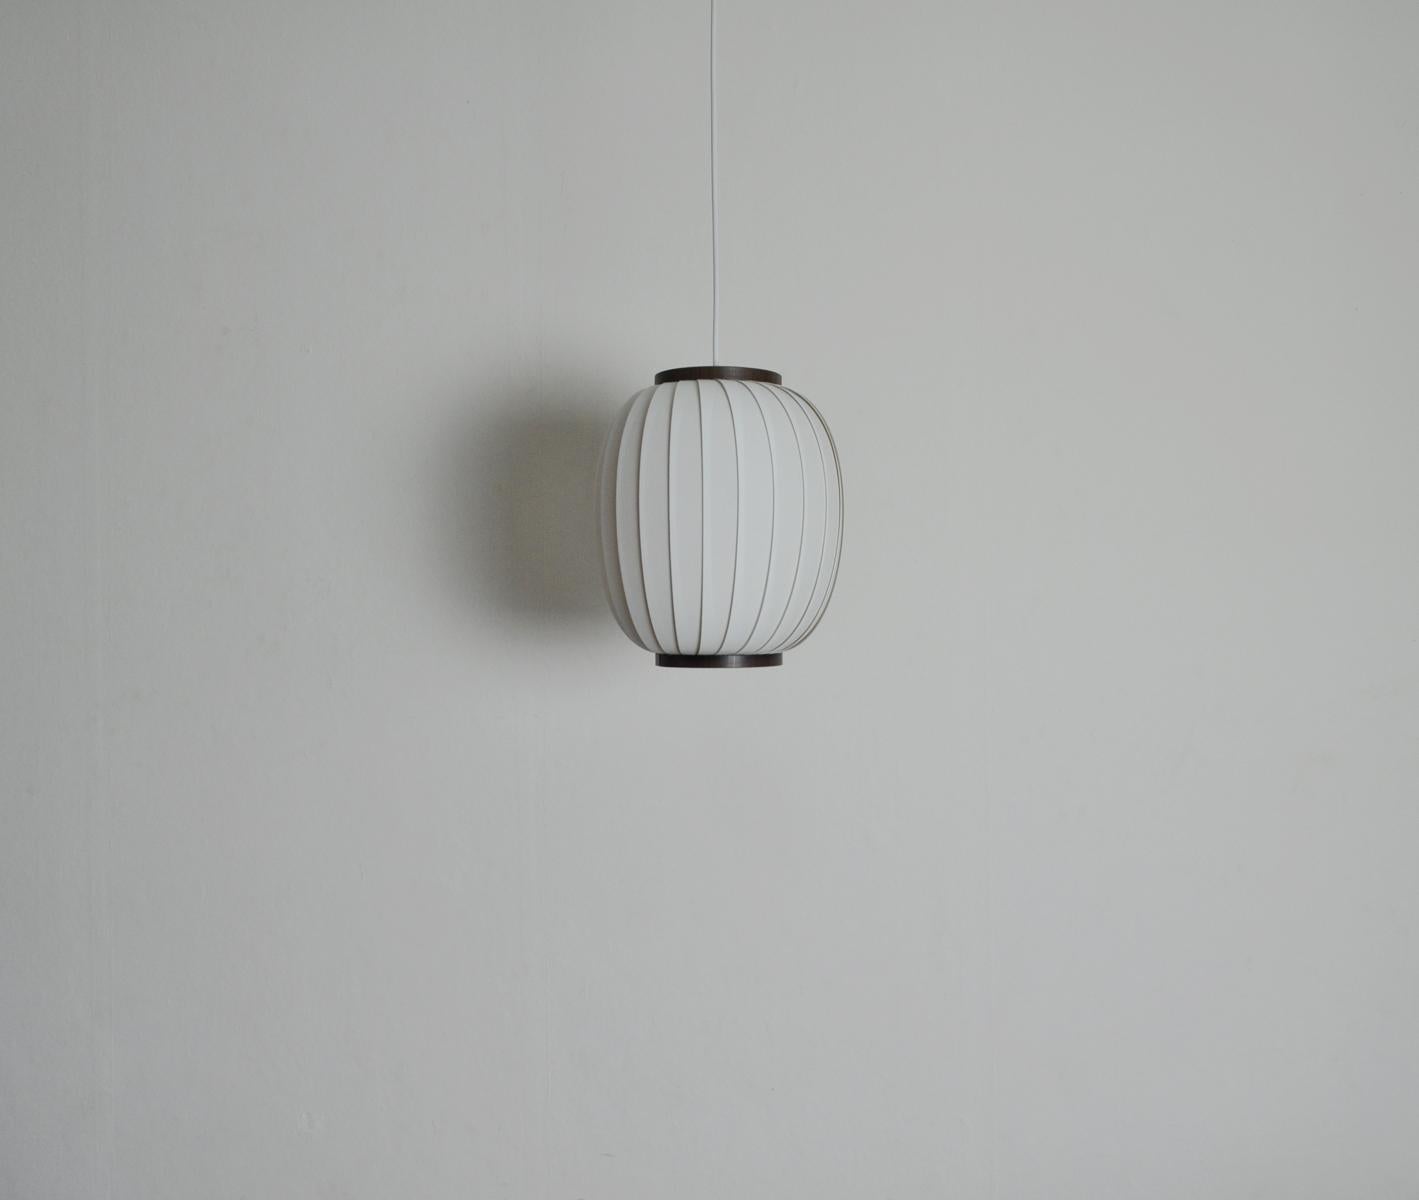 Bojan pendant lamp designed by Lars Eiler Schiøler in the 1970s in Denmark. Manufactured by Hoyrup Light.

Acrylic shades gives an amazing light effect.

Measures: Height 26.5 cm, diameter: 24 cm
Light source: 60 watt, E27 edison screw fitting

Also